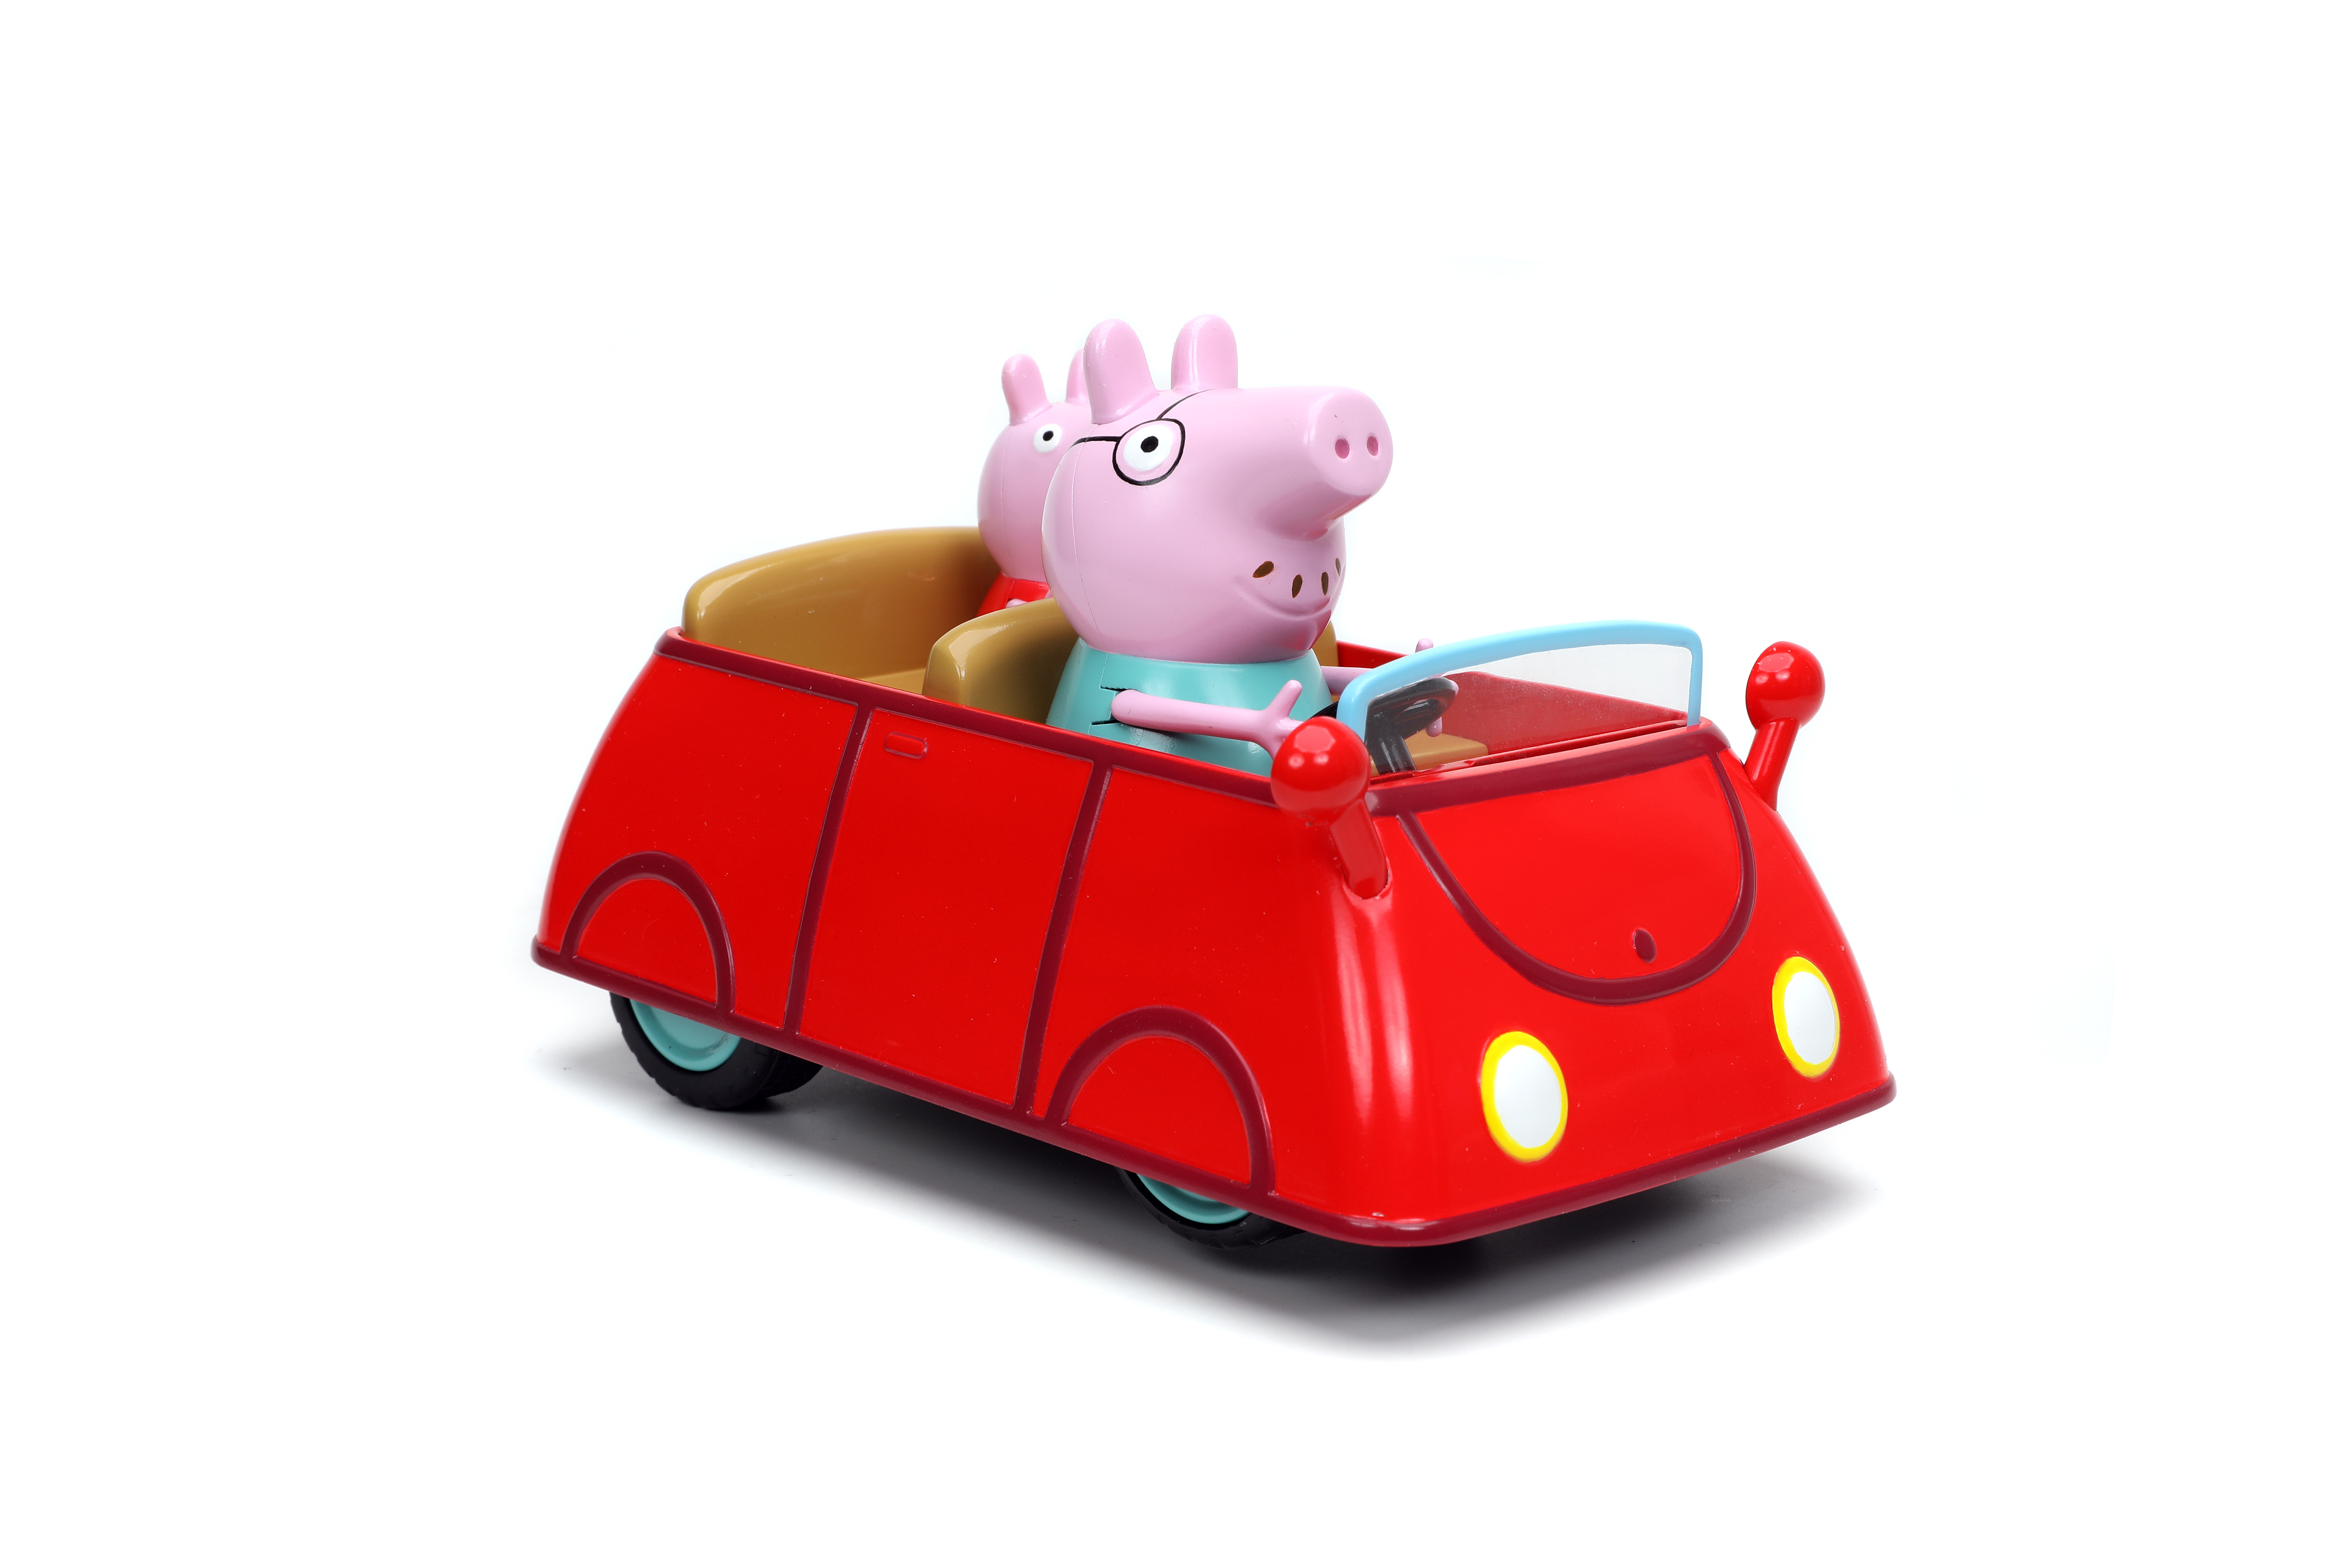 Rot Spielzeugauto Pig Peppa RC Car R/C JADA